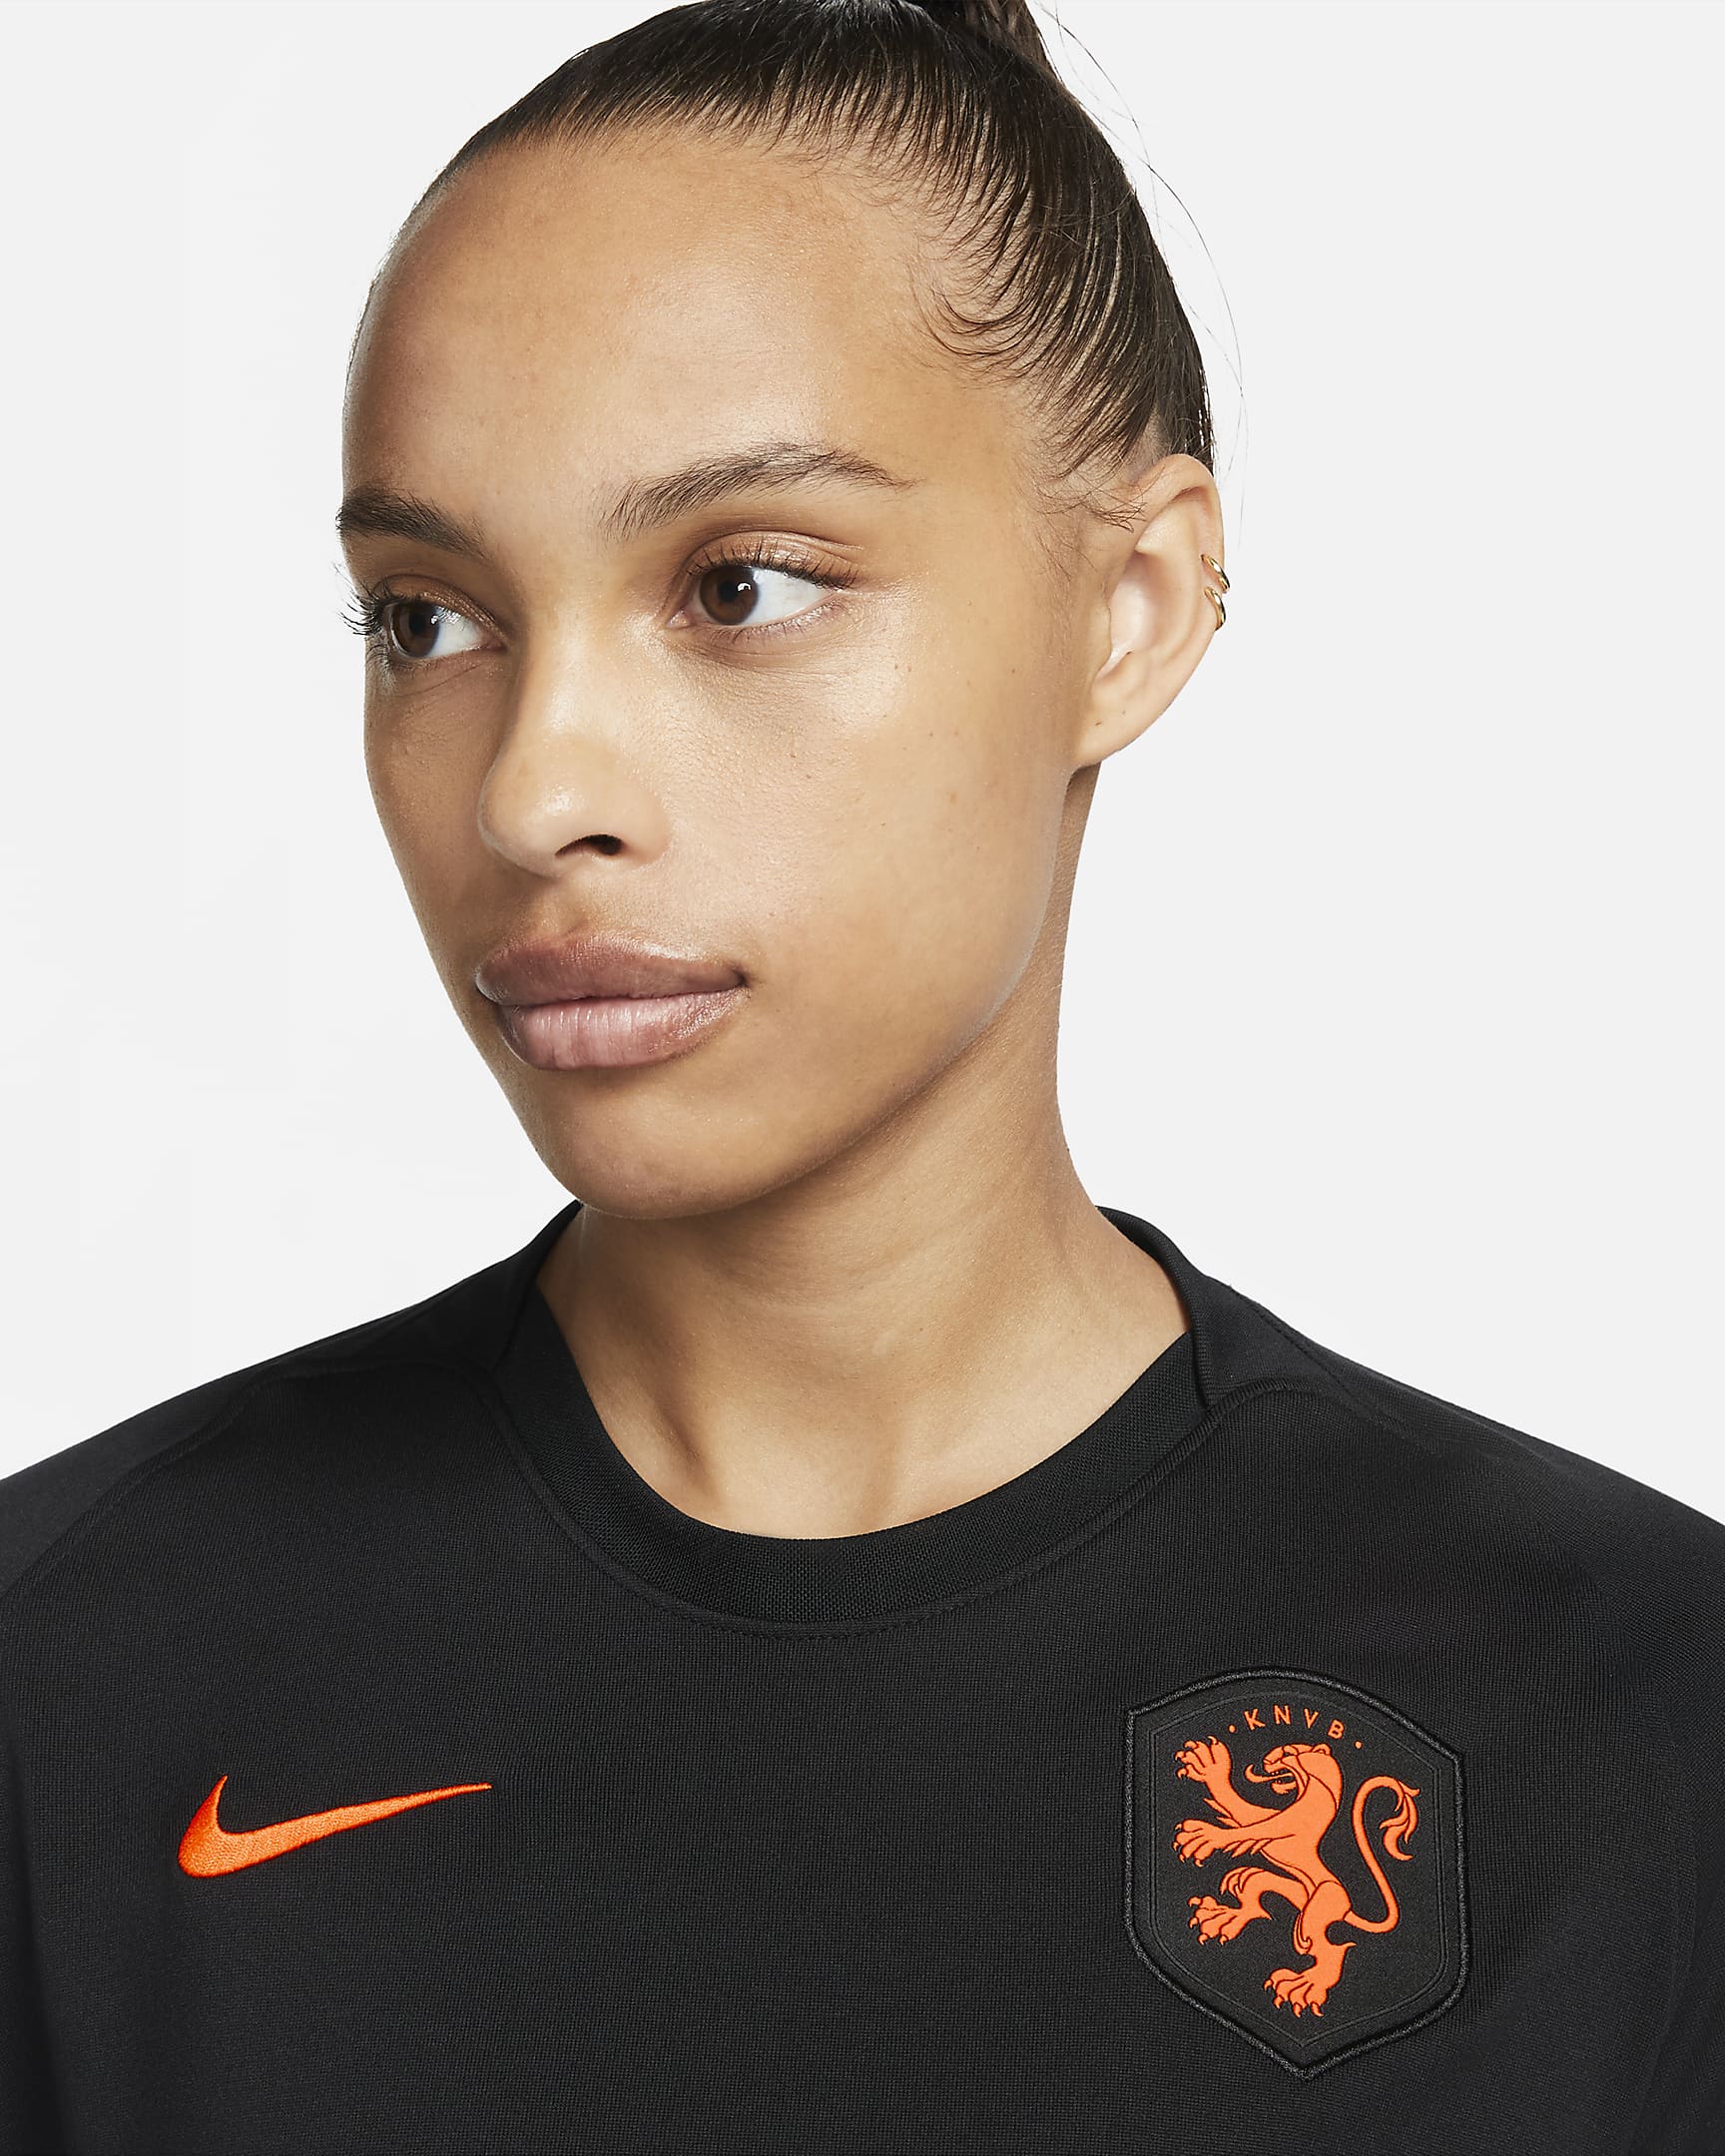 Netherlands Women's Nike Short-Sleeve Football Top. Nike NL